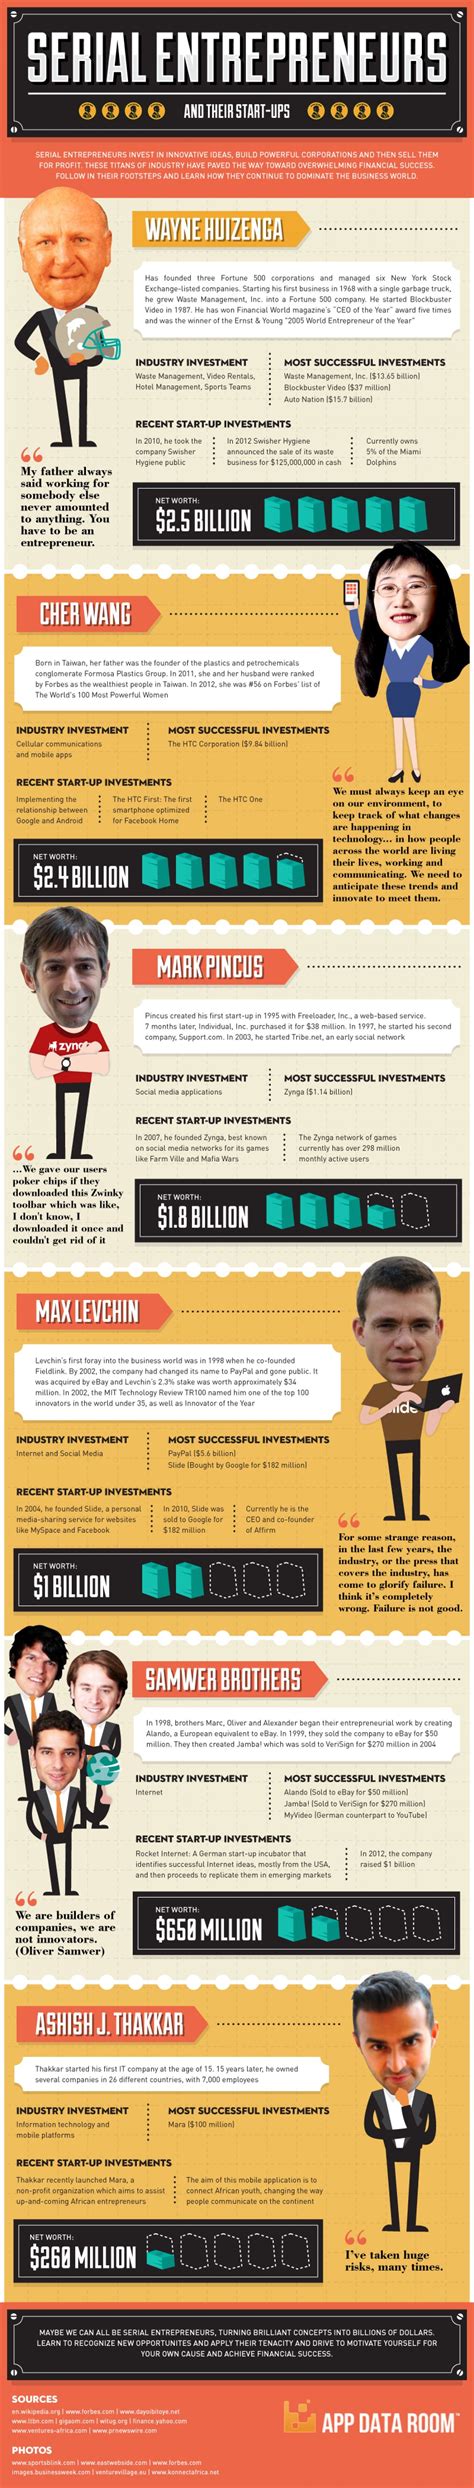 serial entrepreneurs and their start ups infographic startup startups entrepreneurs